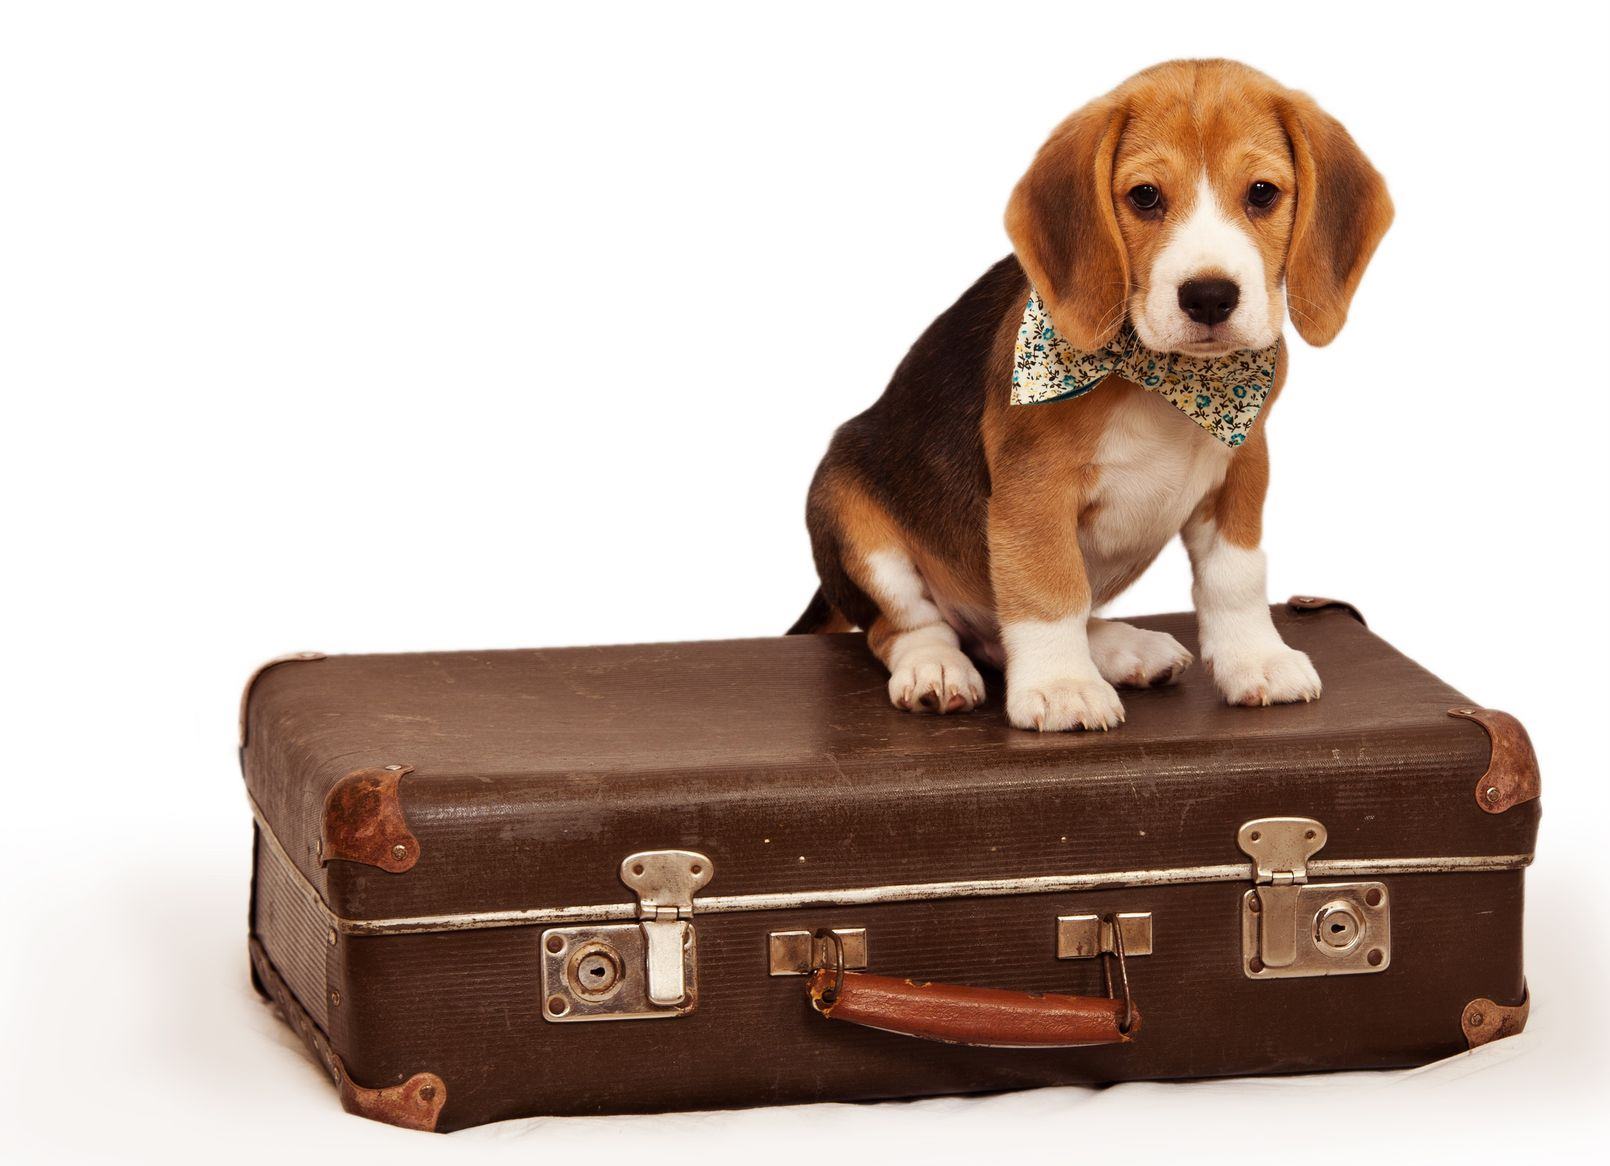 Your pet big. Собака с чемоданом. Животные с чемоданом. Щенки в чемодане. Собака сидит на чемодане.